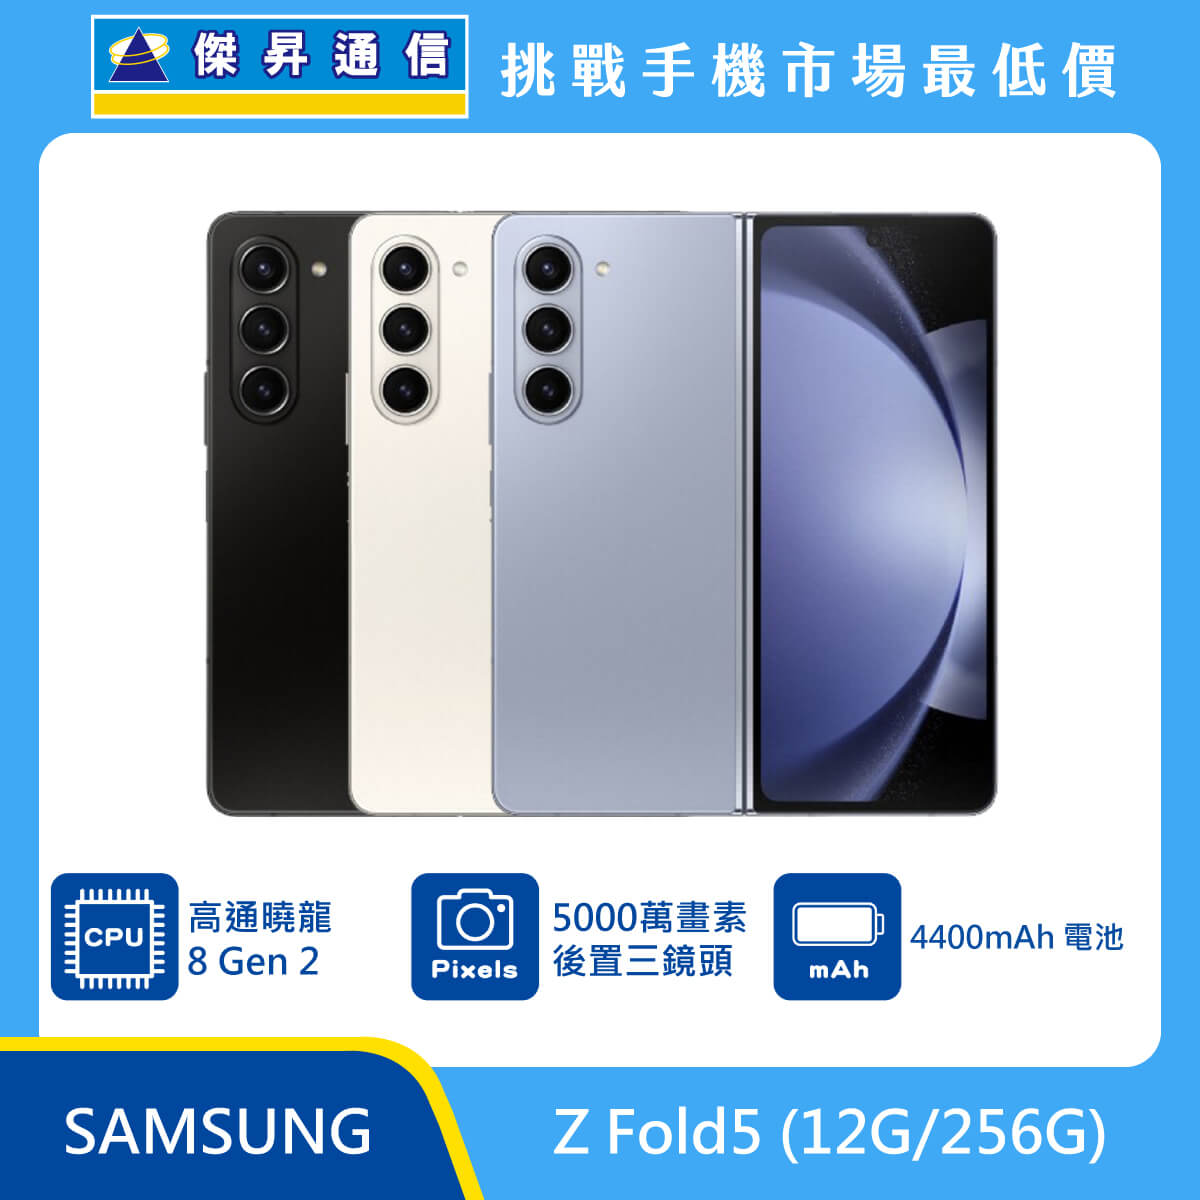 SAMSUNG Z Fold5 (12G/256G)